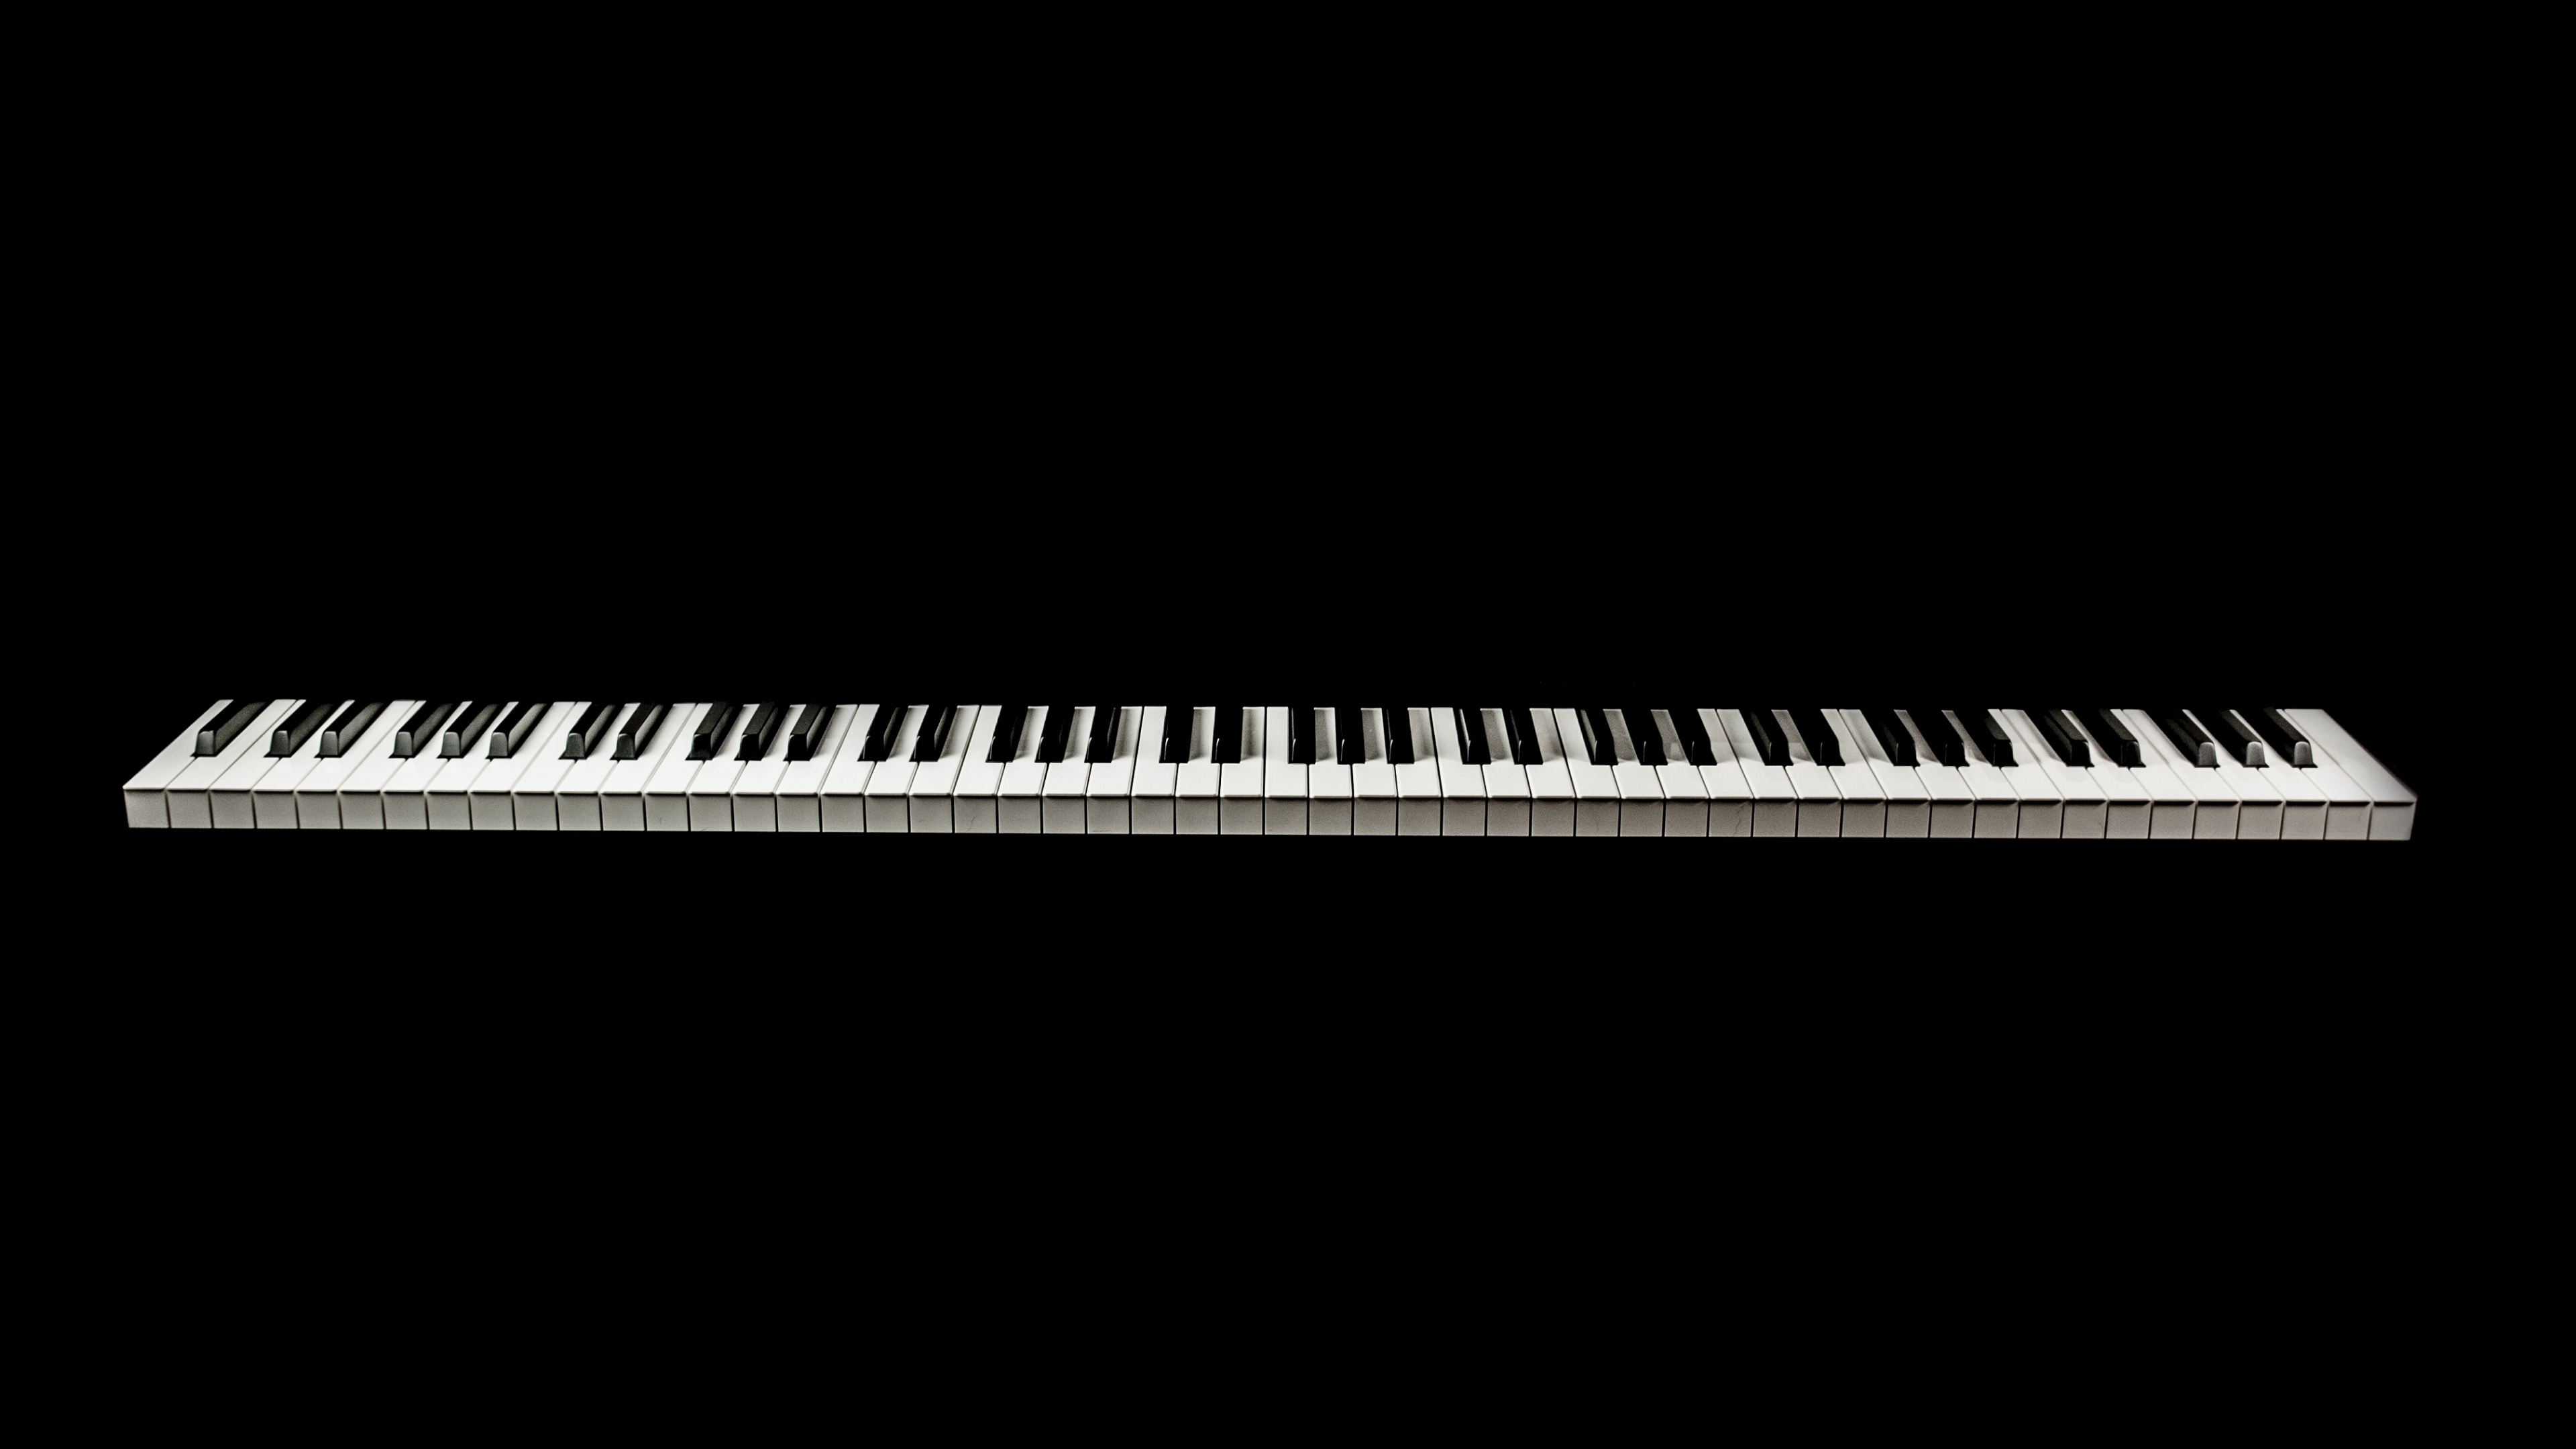 Musical Keyboard, Digital Piano, Electric Piano, Piano, Keyboard. Wallpaper in 3840x2160 Resolution